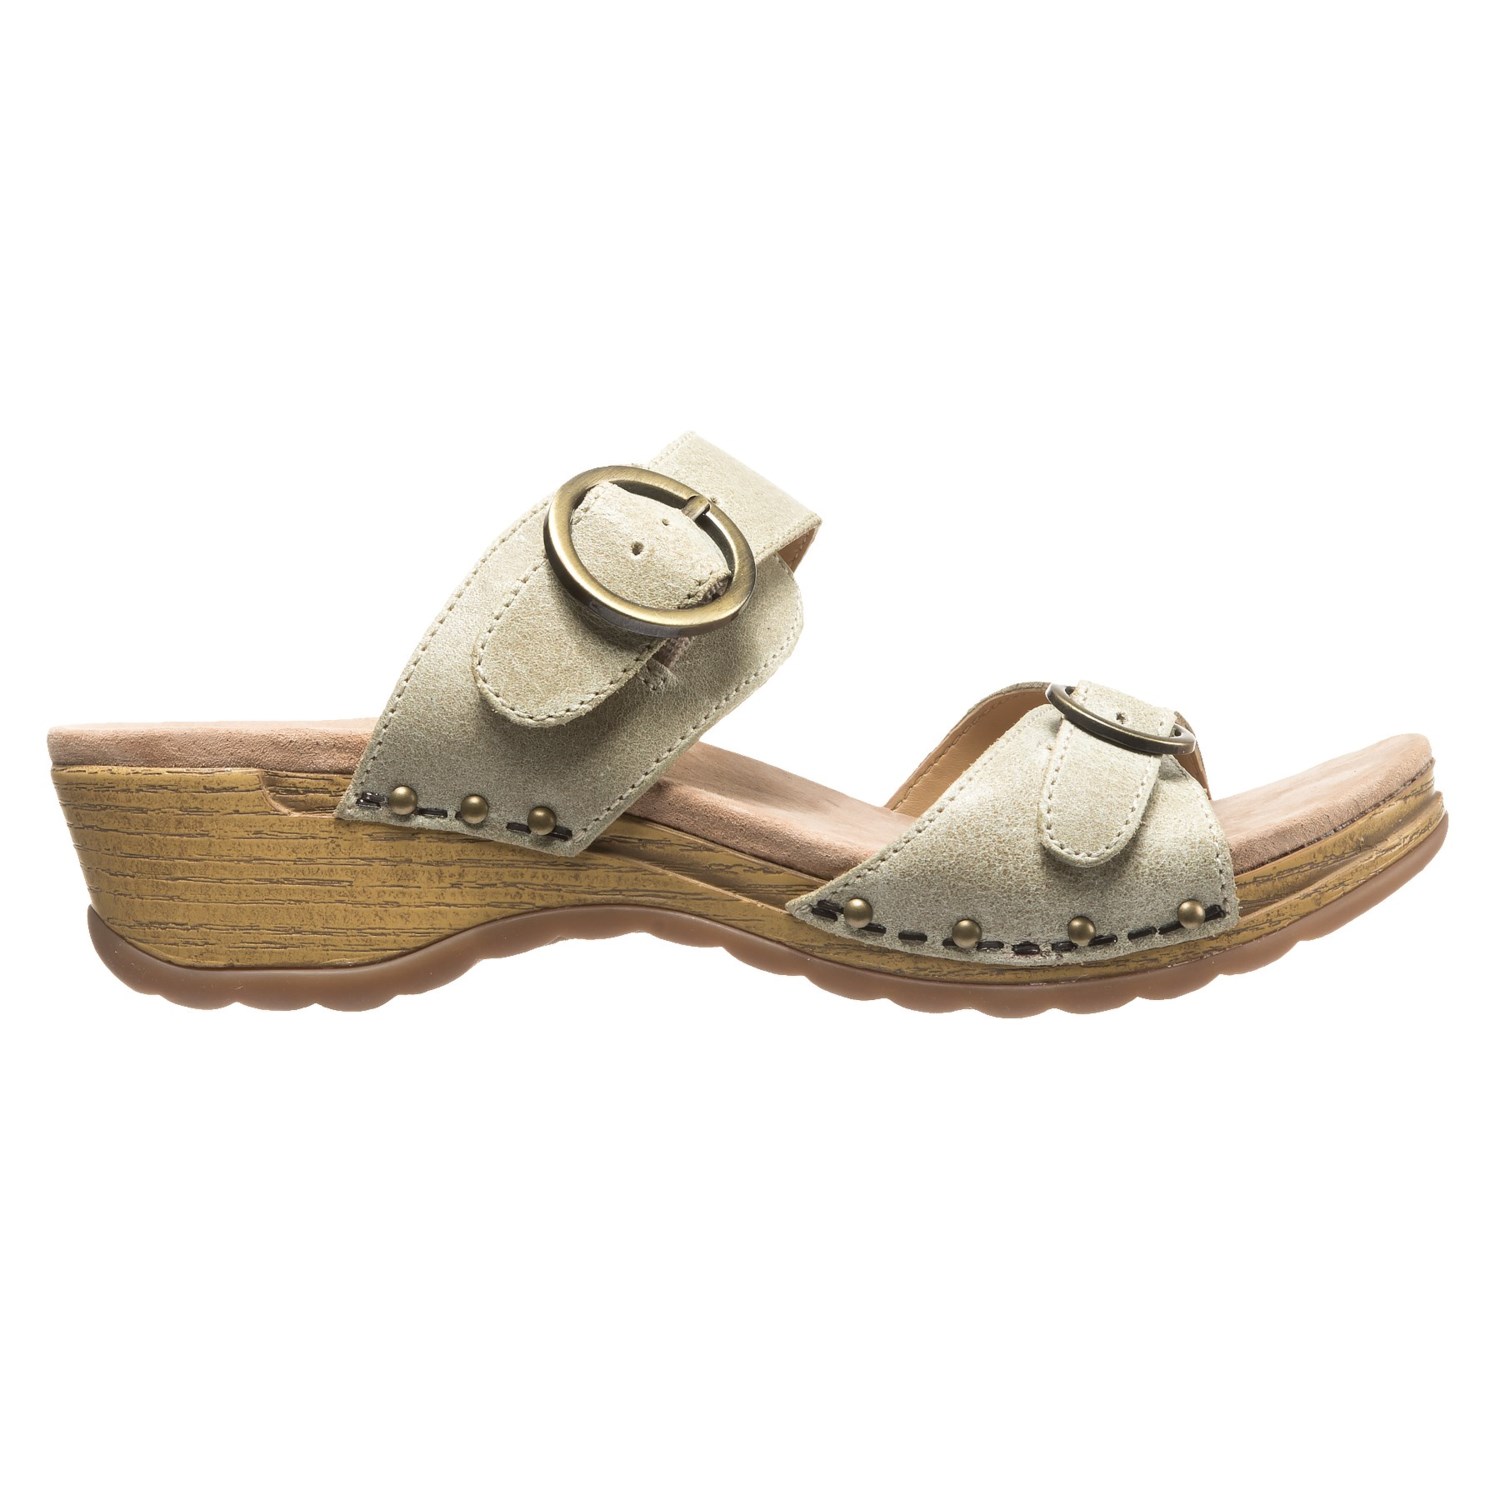 Dansko Manda Sandals (For Women) - Save 39%